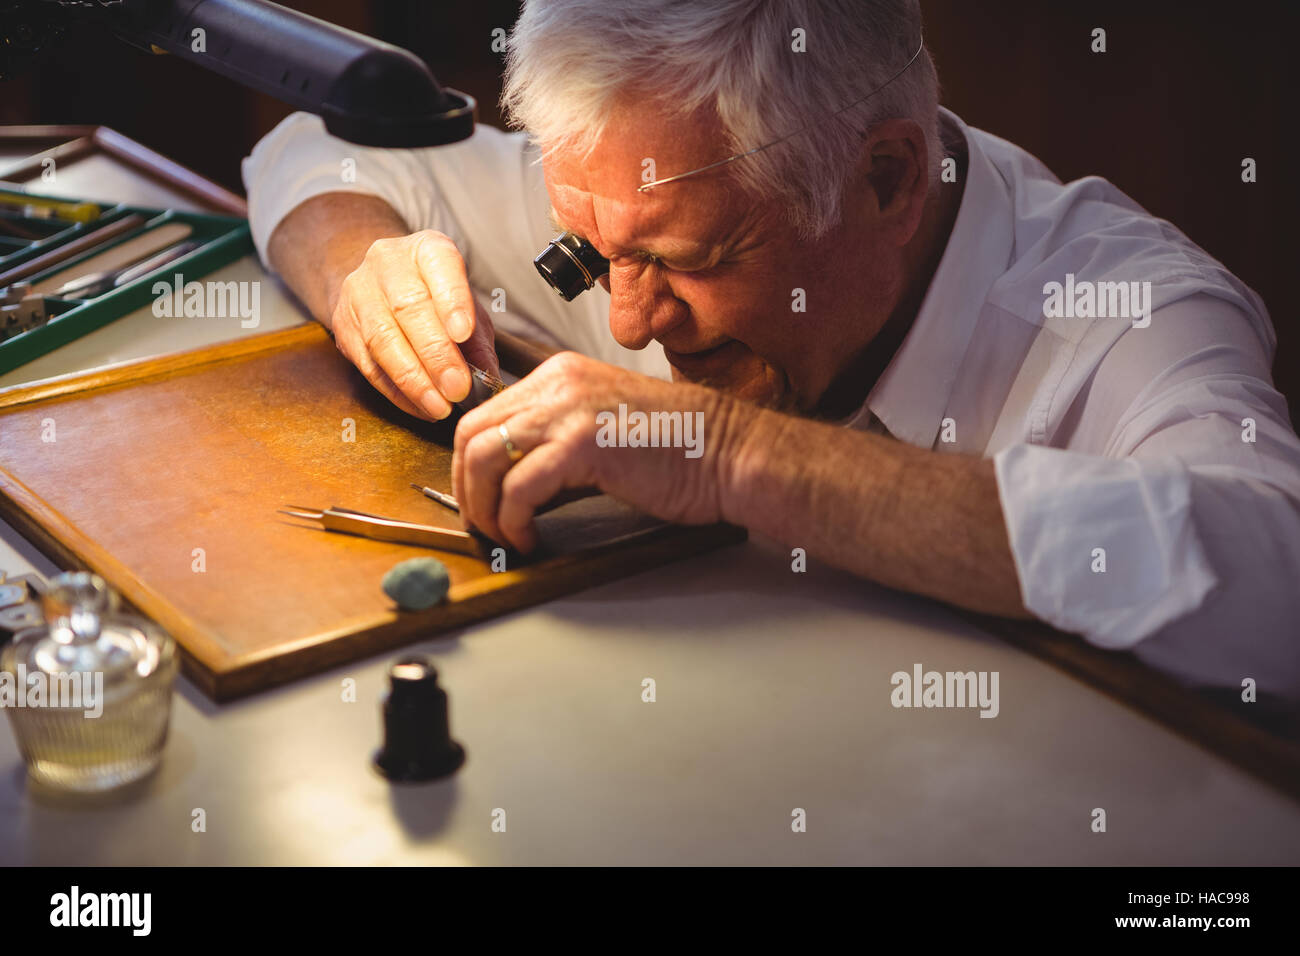 Horologist repairing a watch Stock Photo